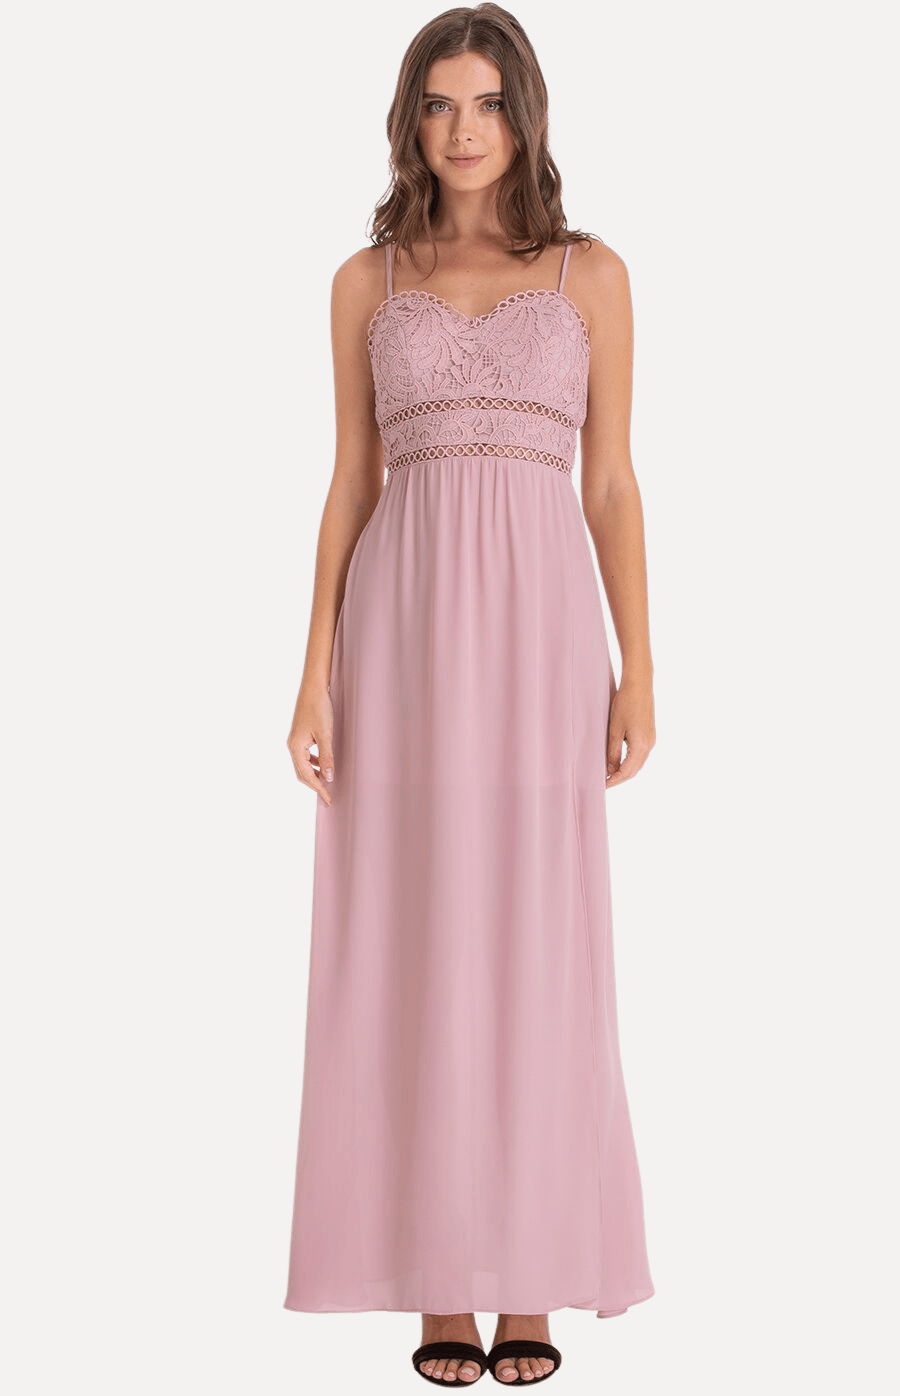 Veronica Maxi Dress in Blush - Ophelia Fox Boutique